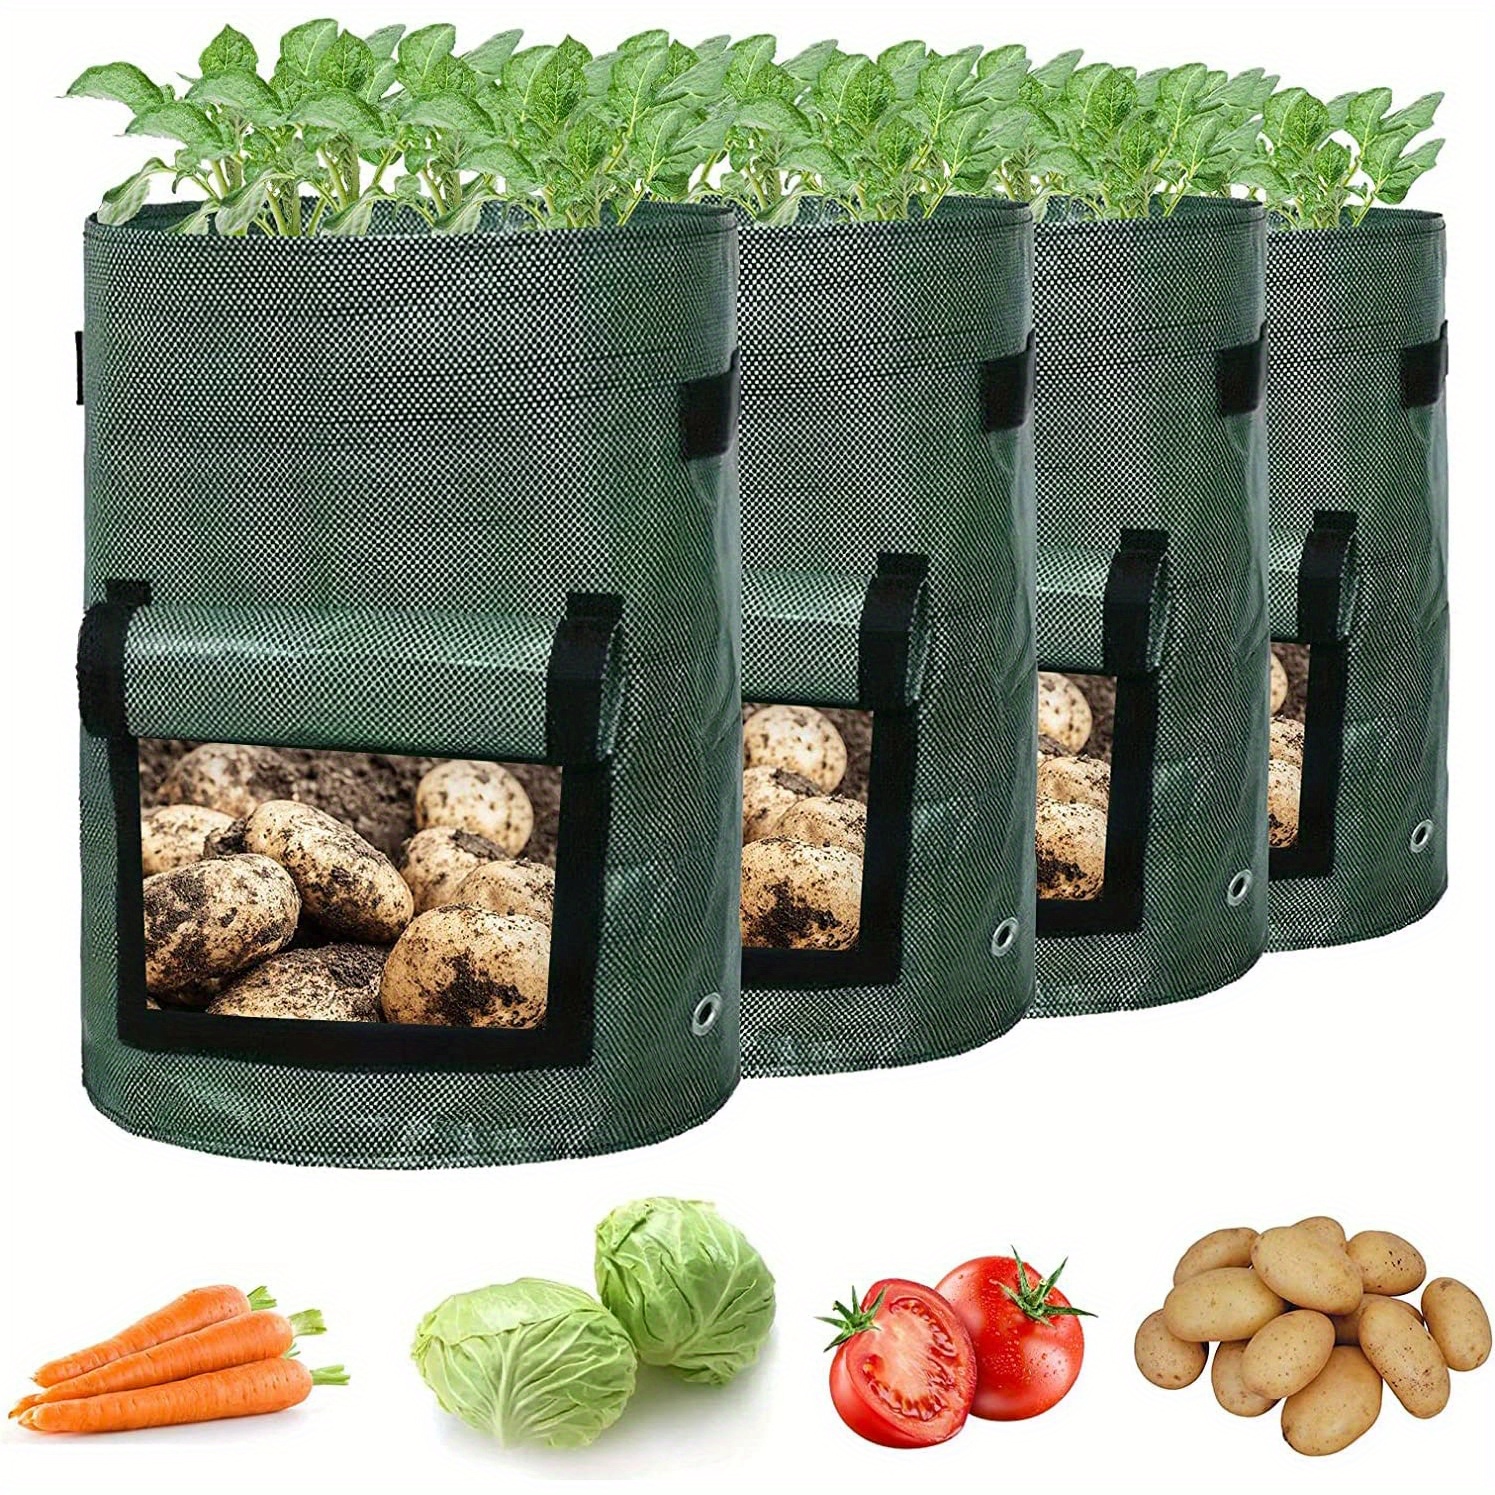 NAMTSO Potato Grow Bags 7 Gallon 4 Pack, Potato Planter Bags with Flap,  Potato Bags for Growing Potatoes, Carrots, Onions, Sweet Potatoes